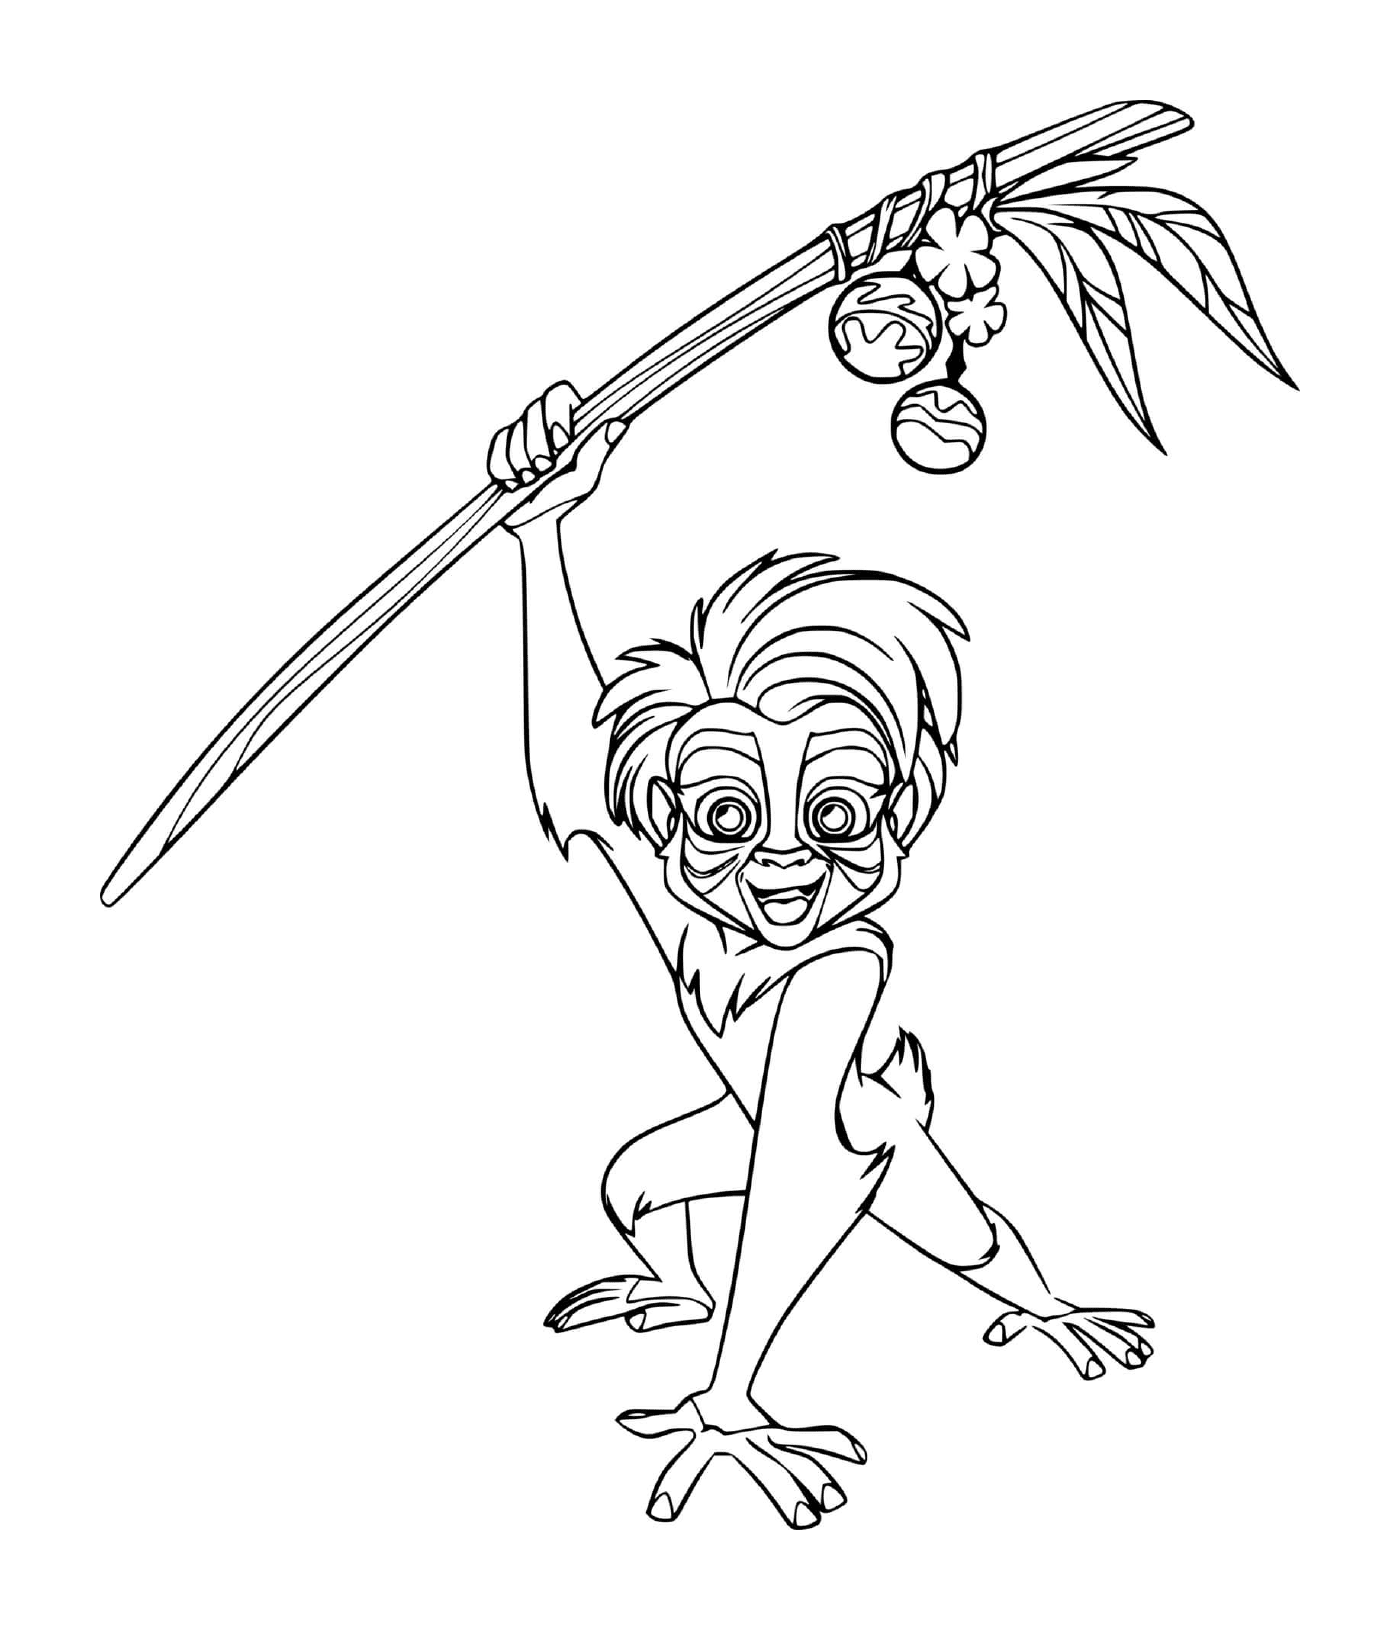   Jeune Rafiki brandissant une lance 